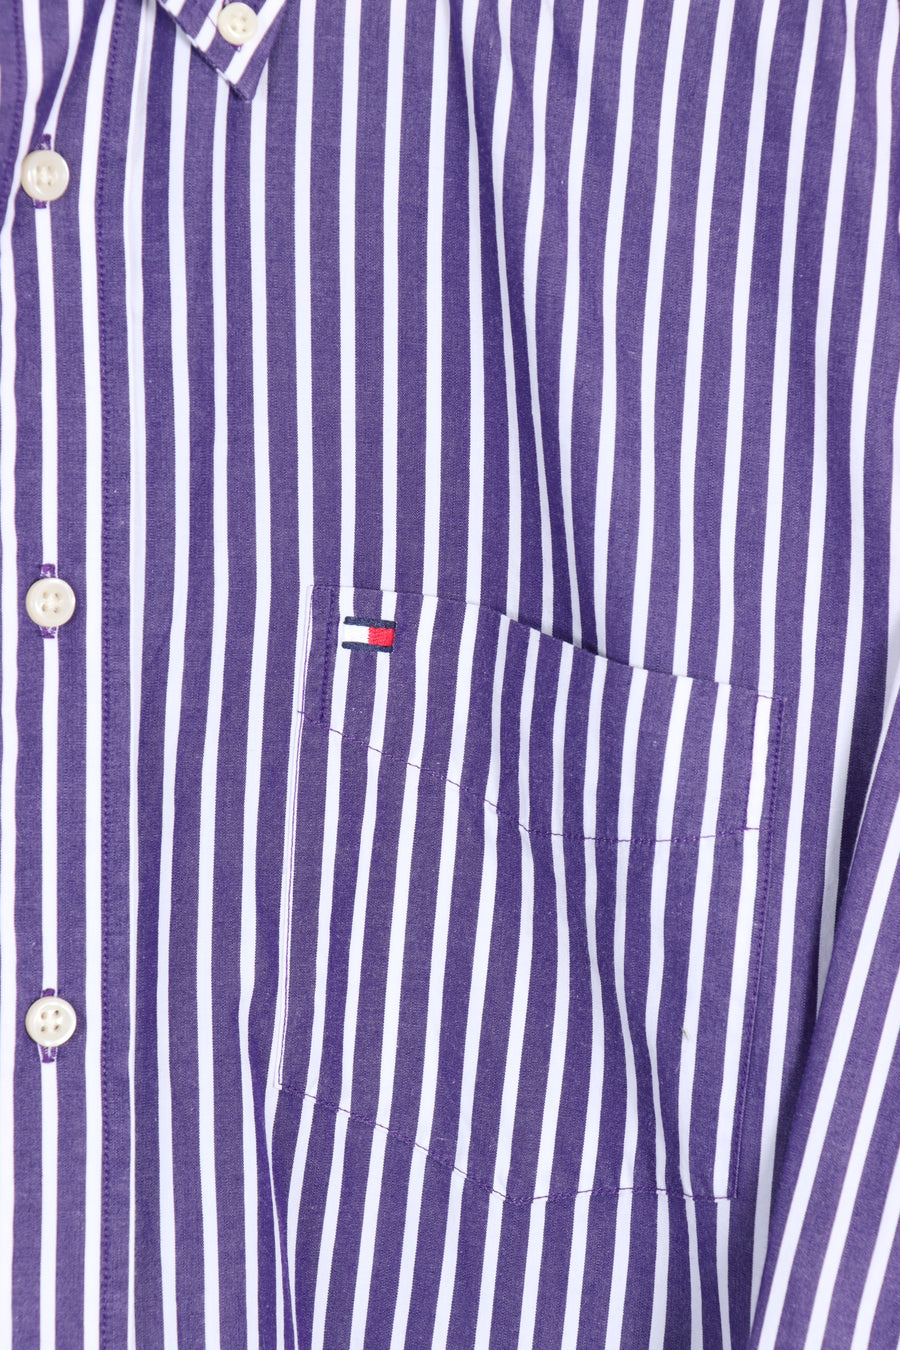 TOMMY HILFIGER Purple & White Stripe Long Sleeve Shirt (M)